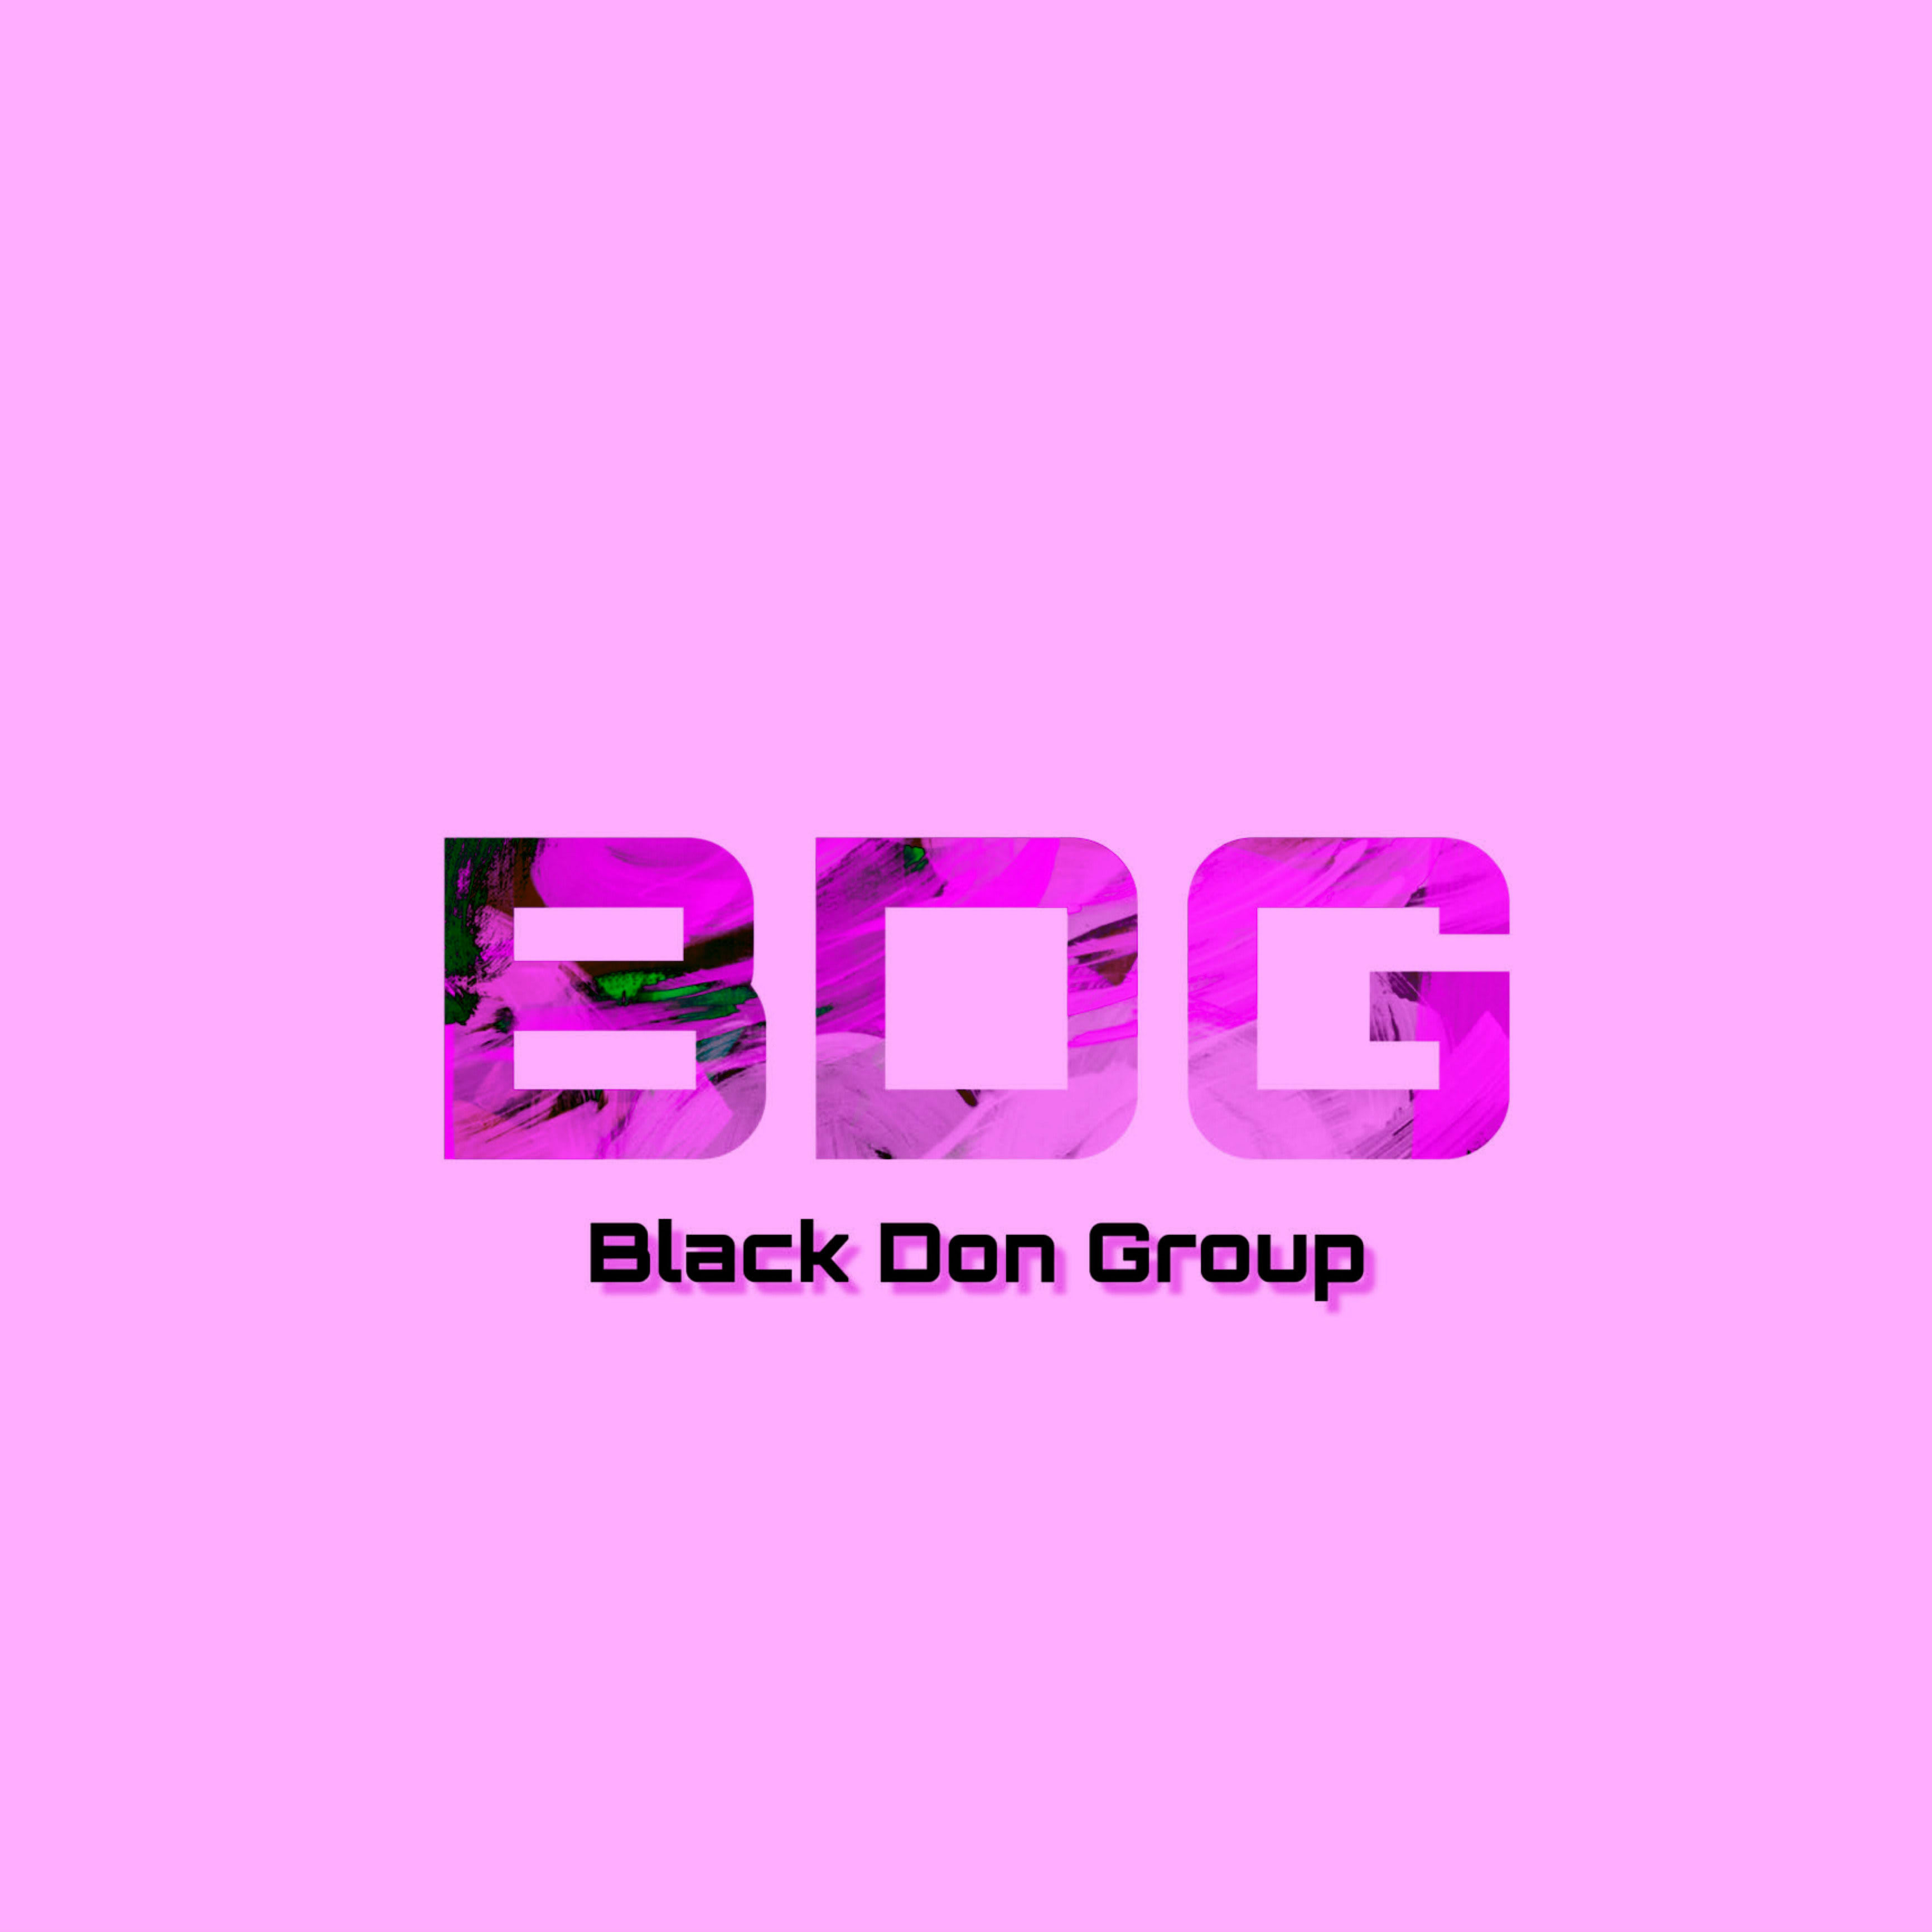 Black Don Group